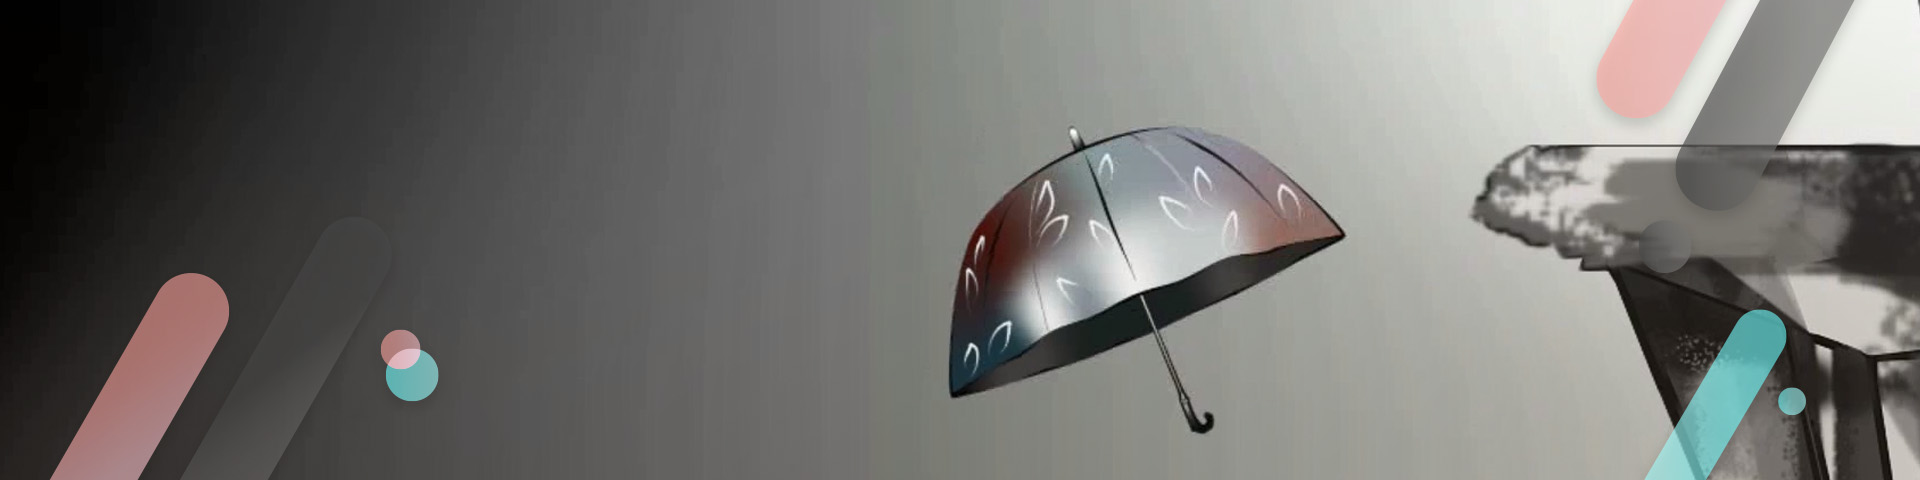 انیمیشن چتر2/ سقوط